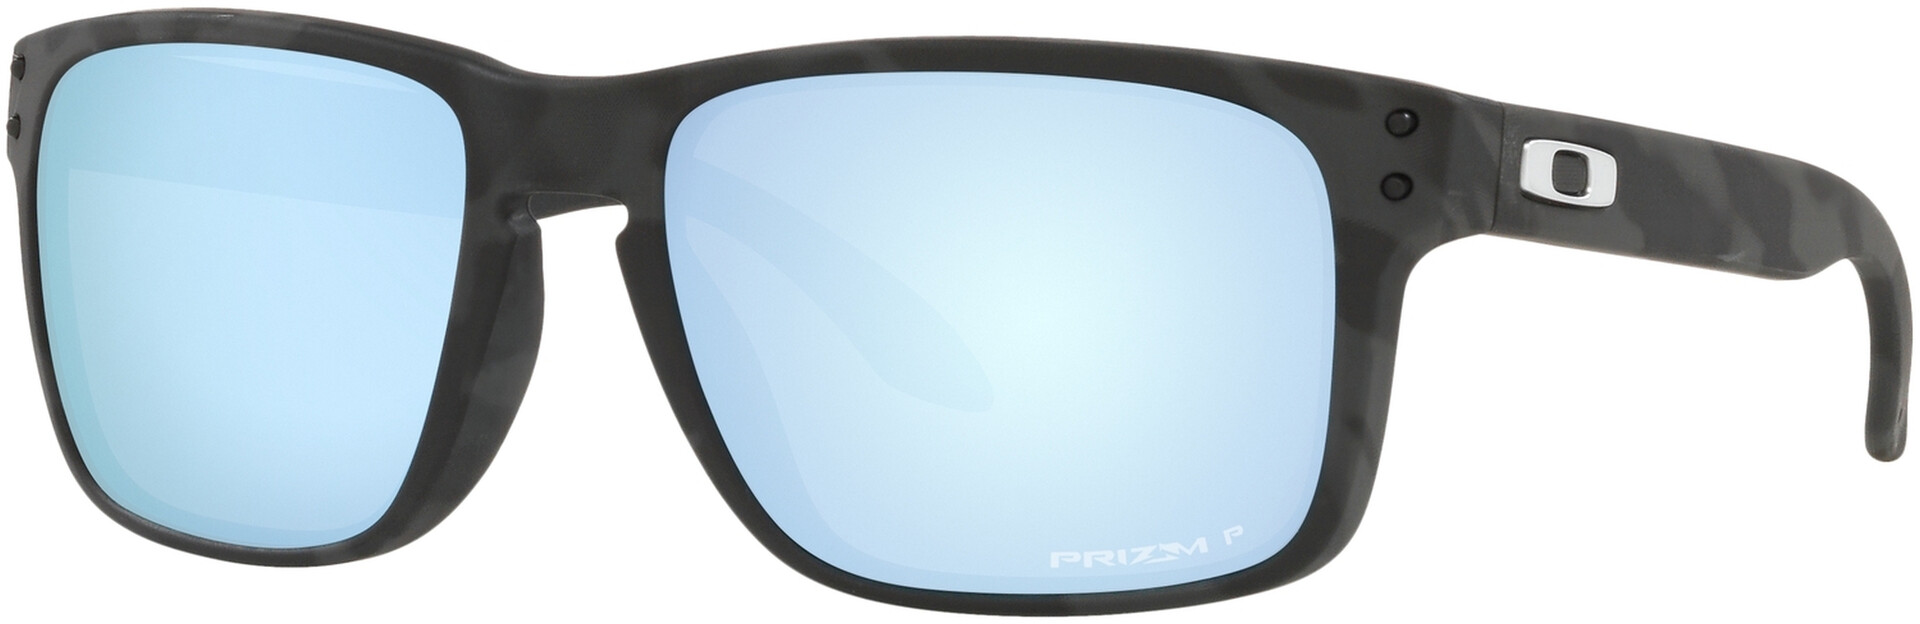 oakley polarized sunglasses for men